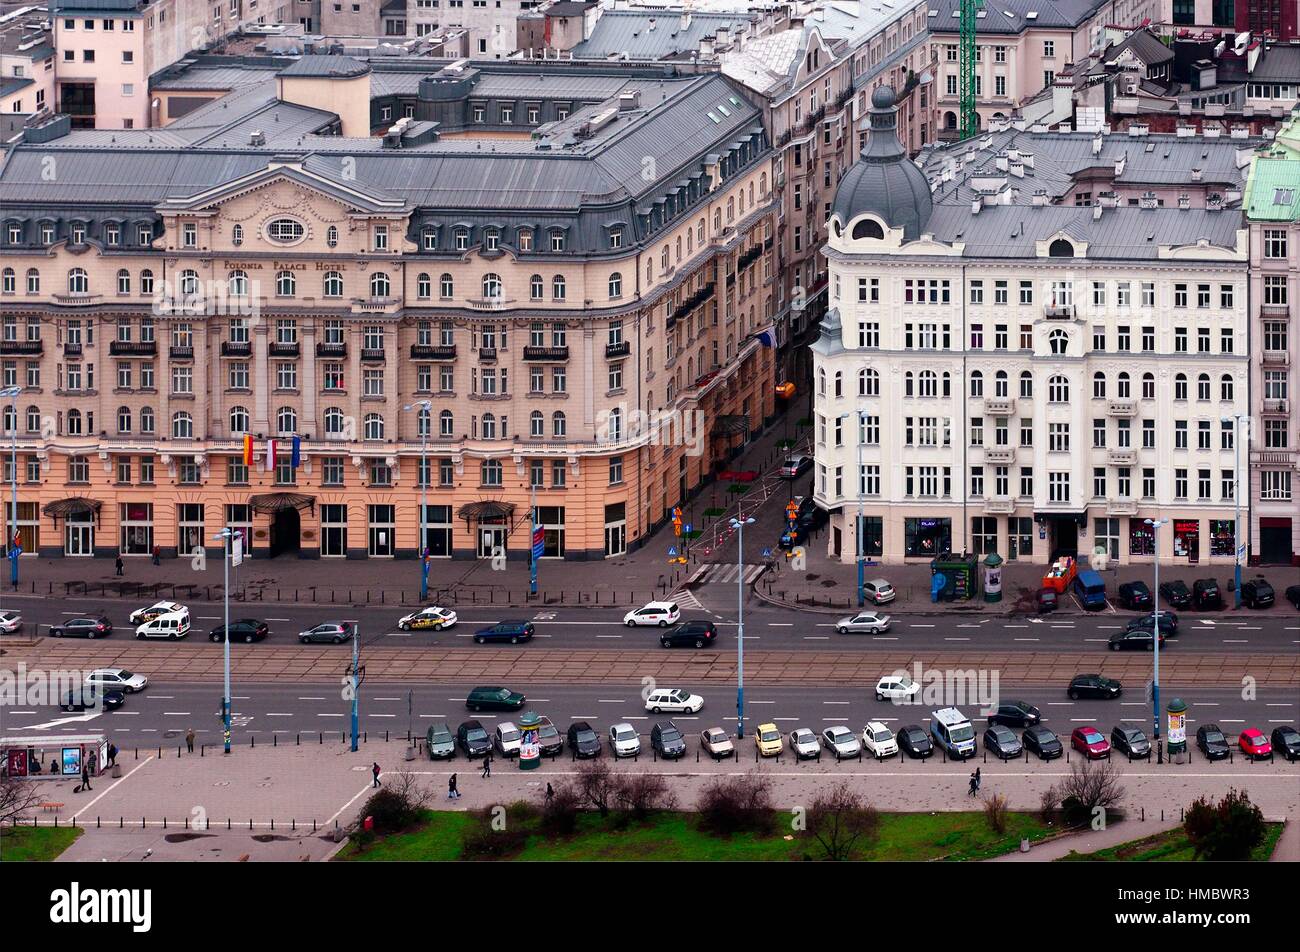 Srodmiescie - centro de distrito, en el centro de Varsovia, aleje jerozolimskie - jerozolimskie Avenue, el histórico hotel Polonia Palace (1913) a la izquierda, Varsovia, Foto de stock